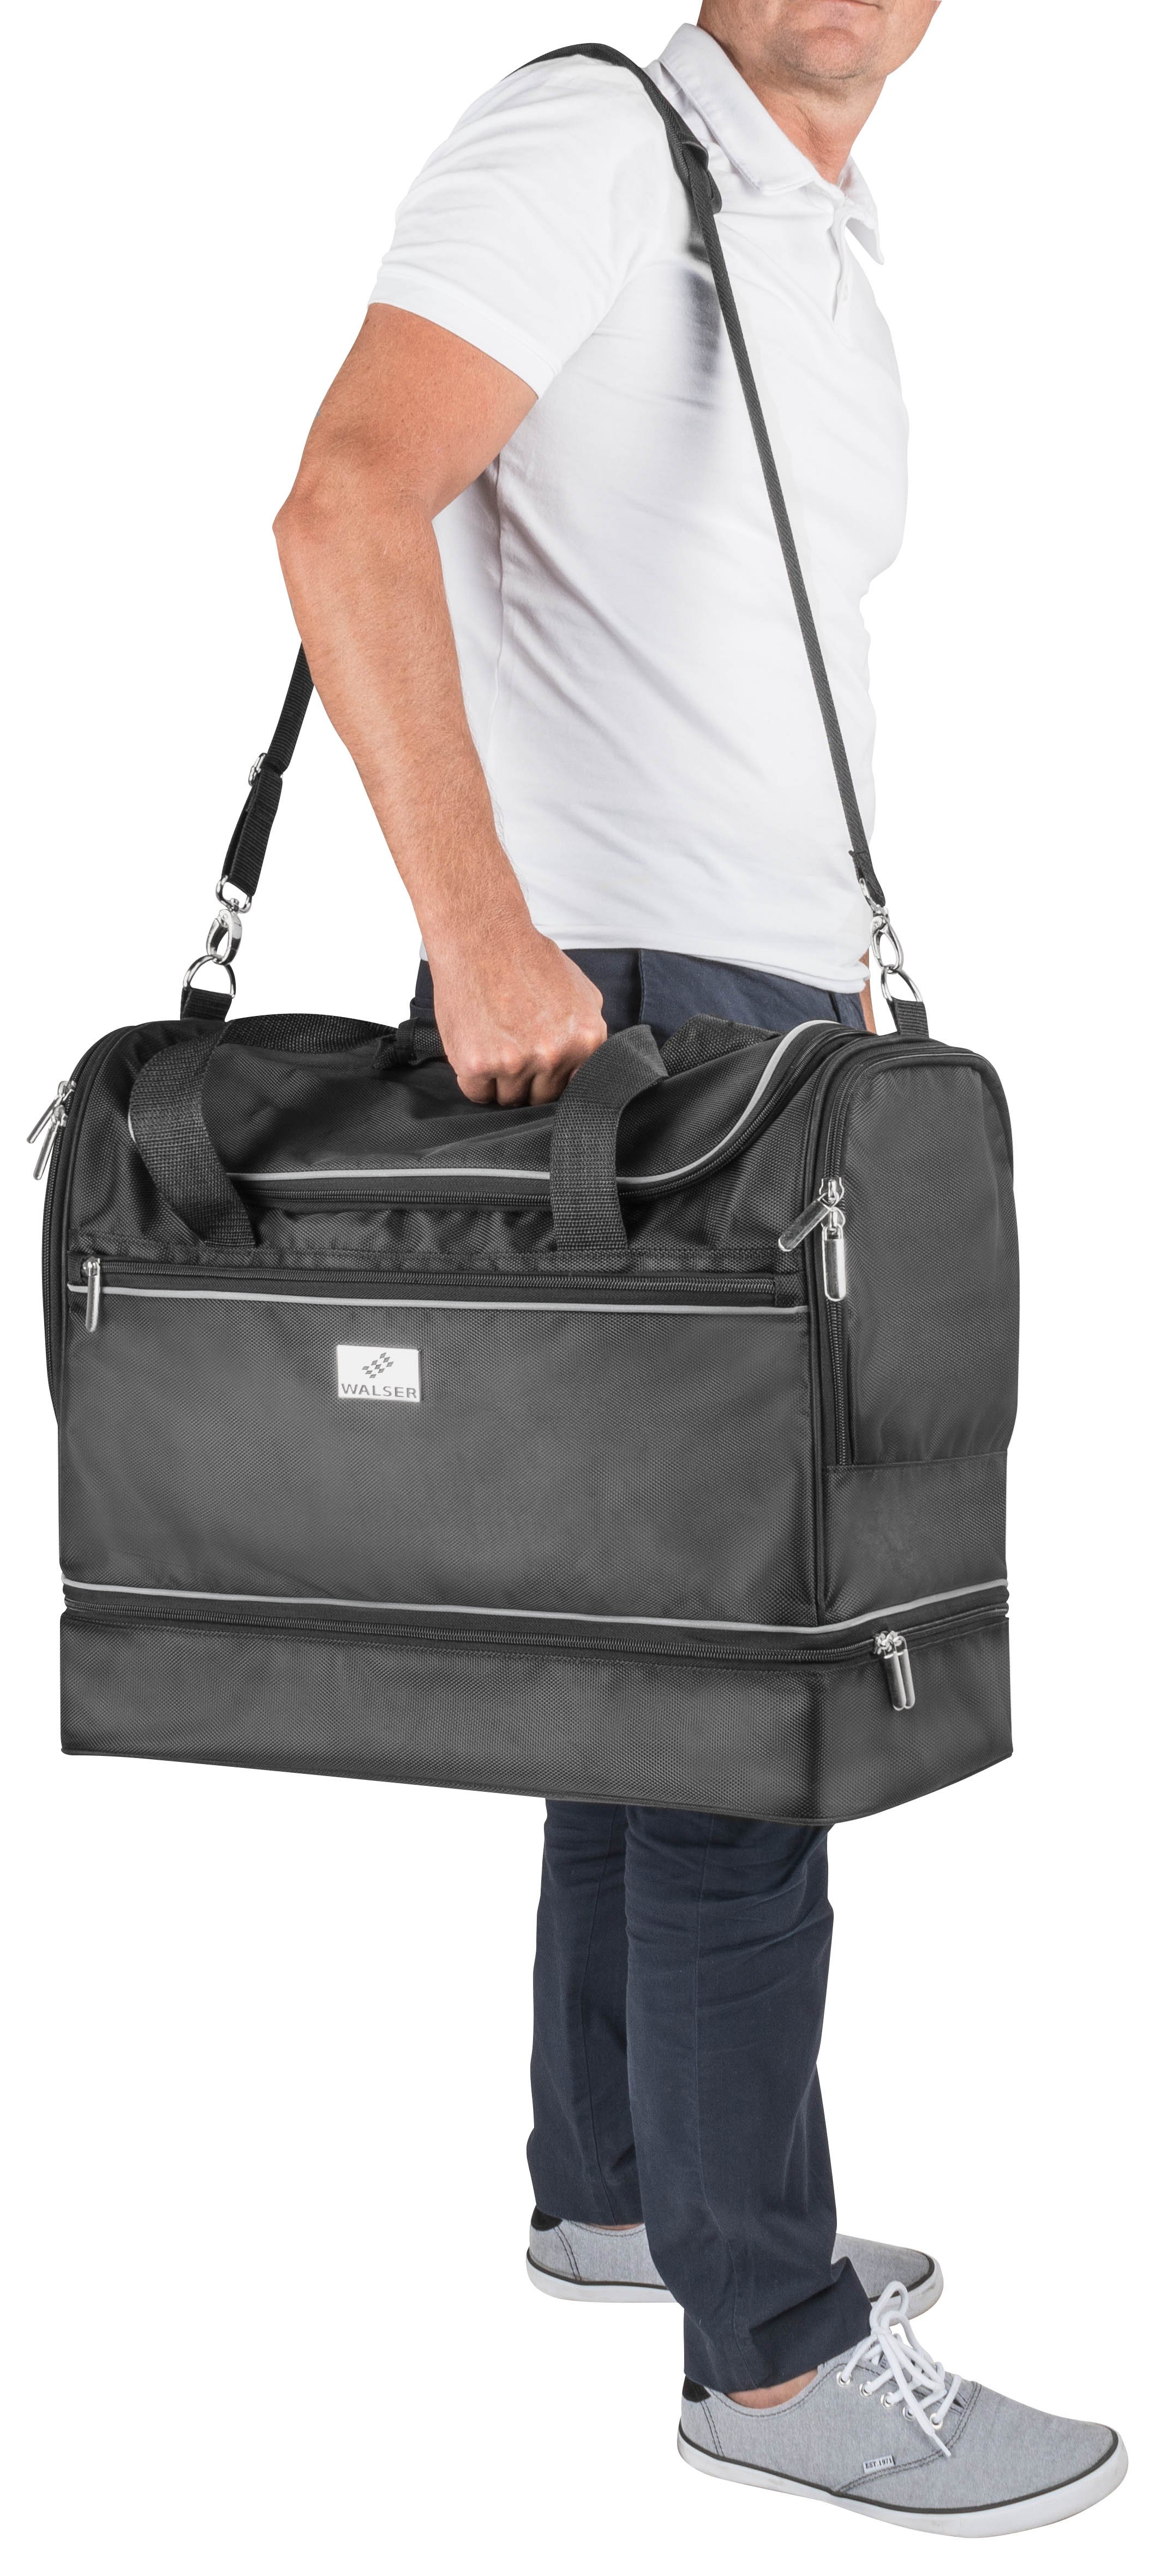 Carbags sports bag 55x30x40cm black